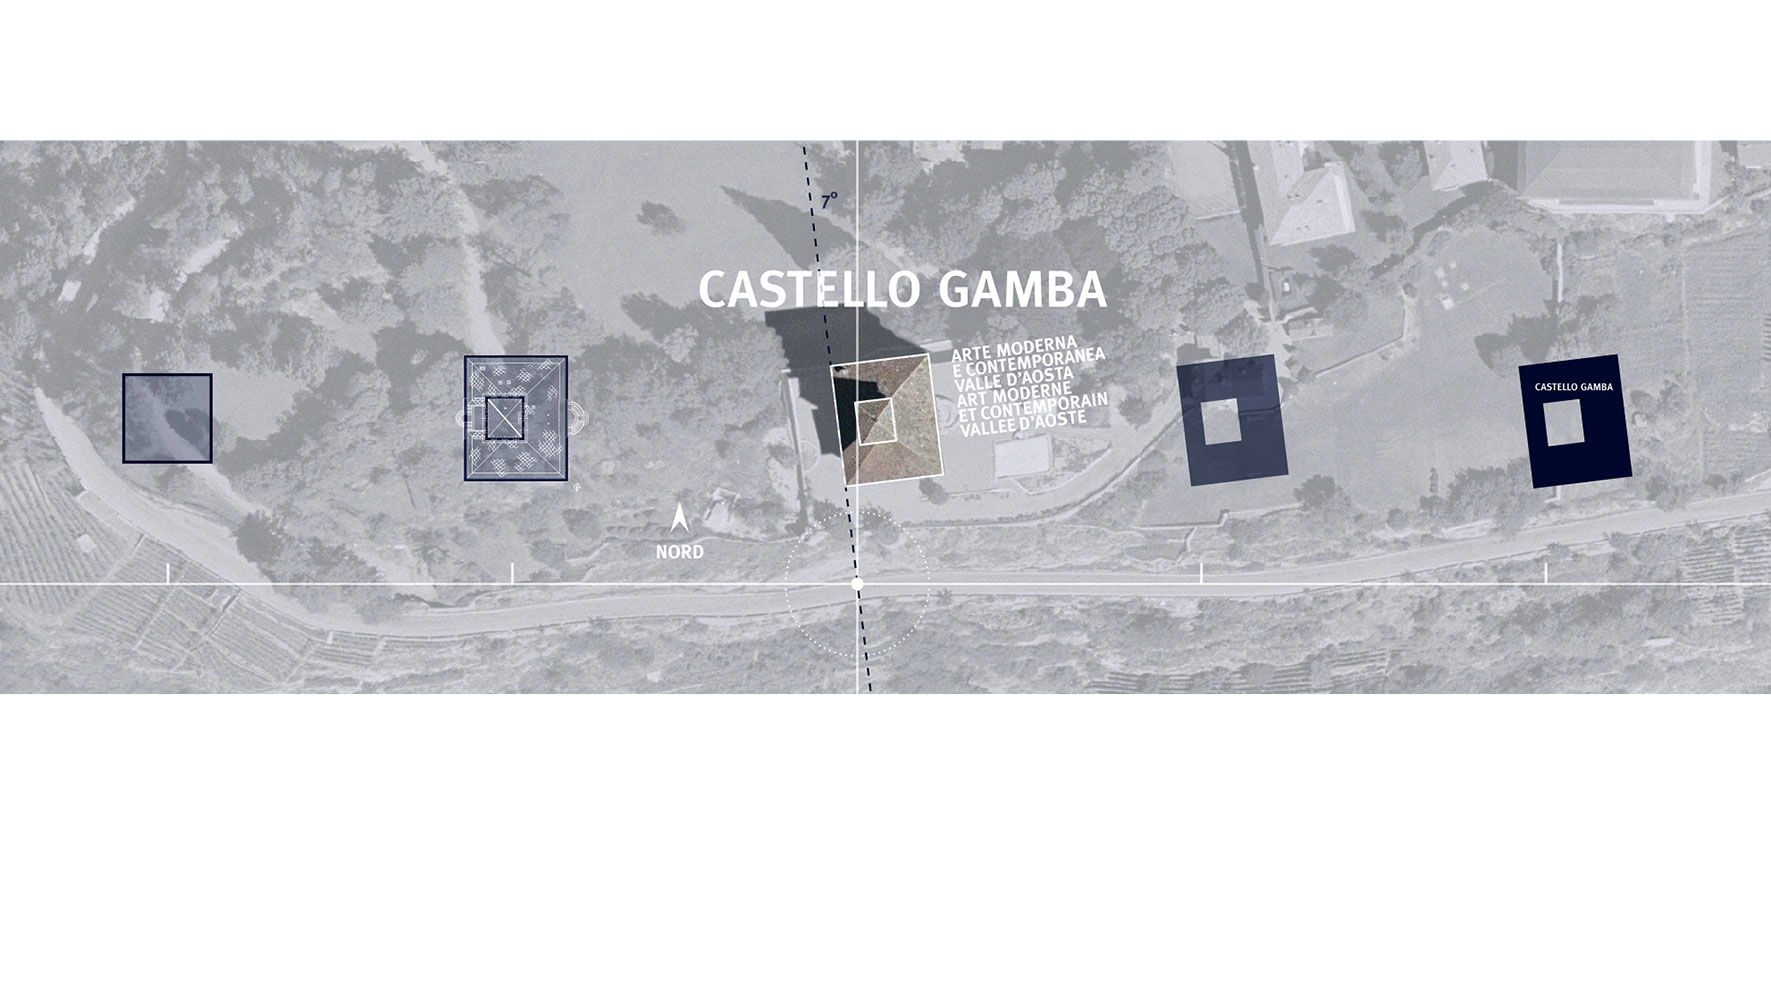 Castello Gamba